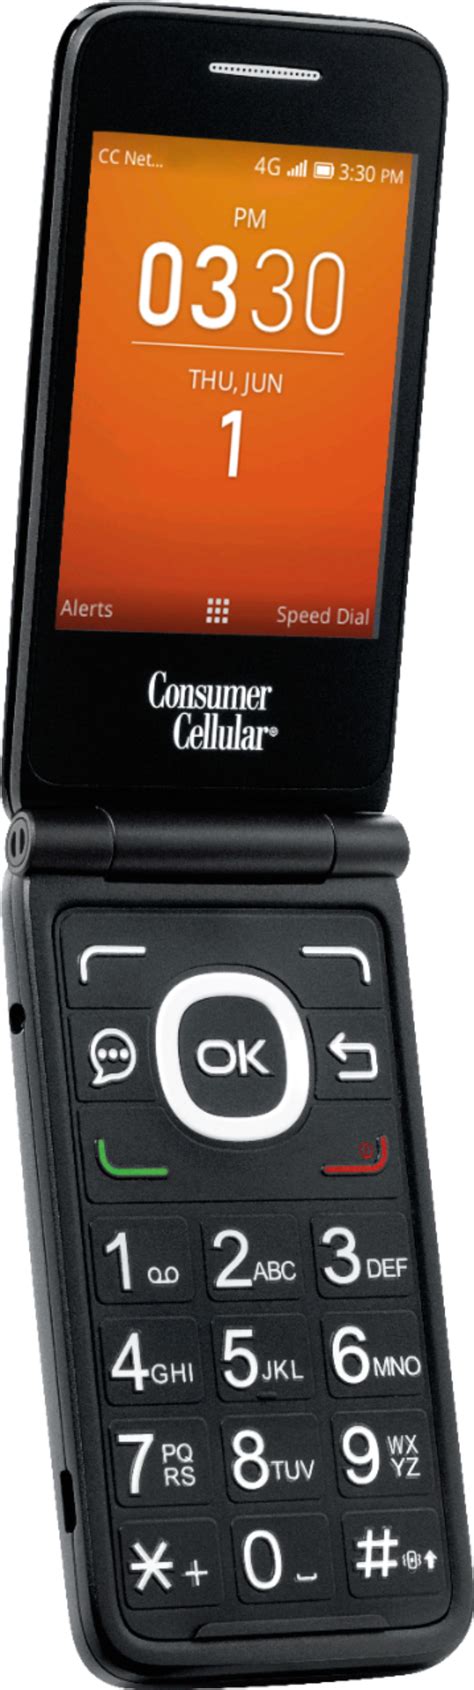 Customer Reviews Alcatel Go Flip Cell Phone Black Consumer Cellular